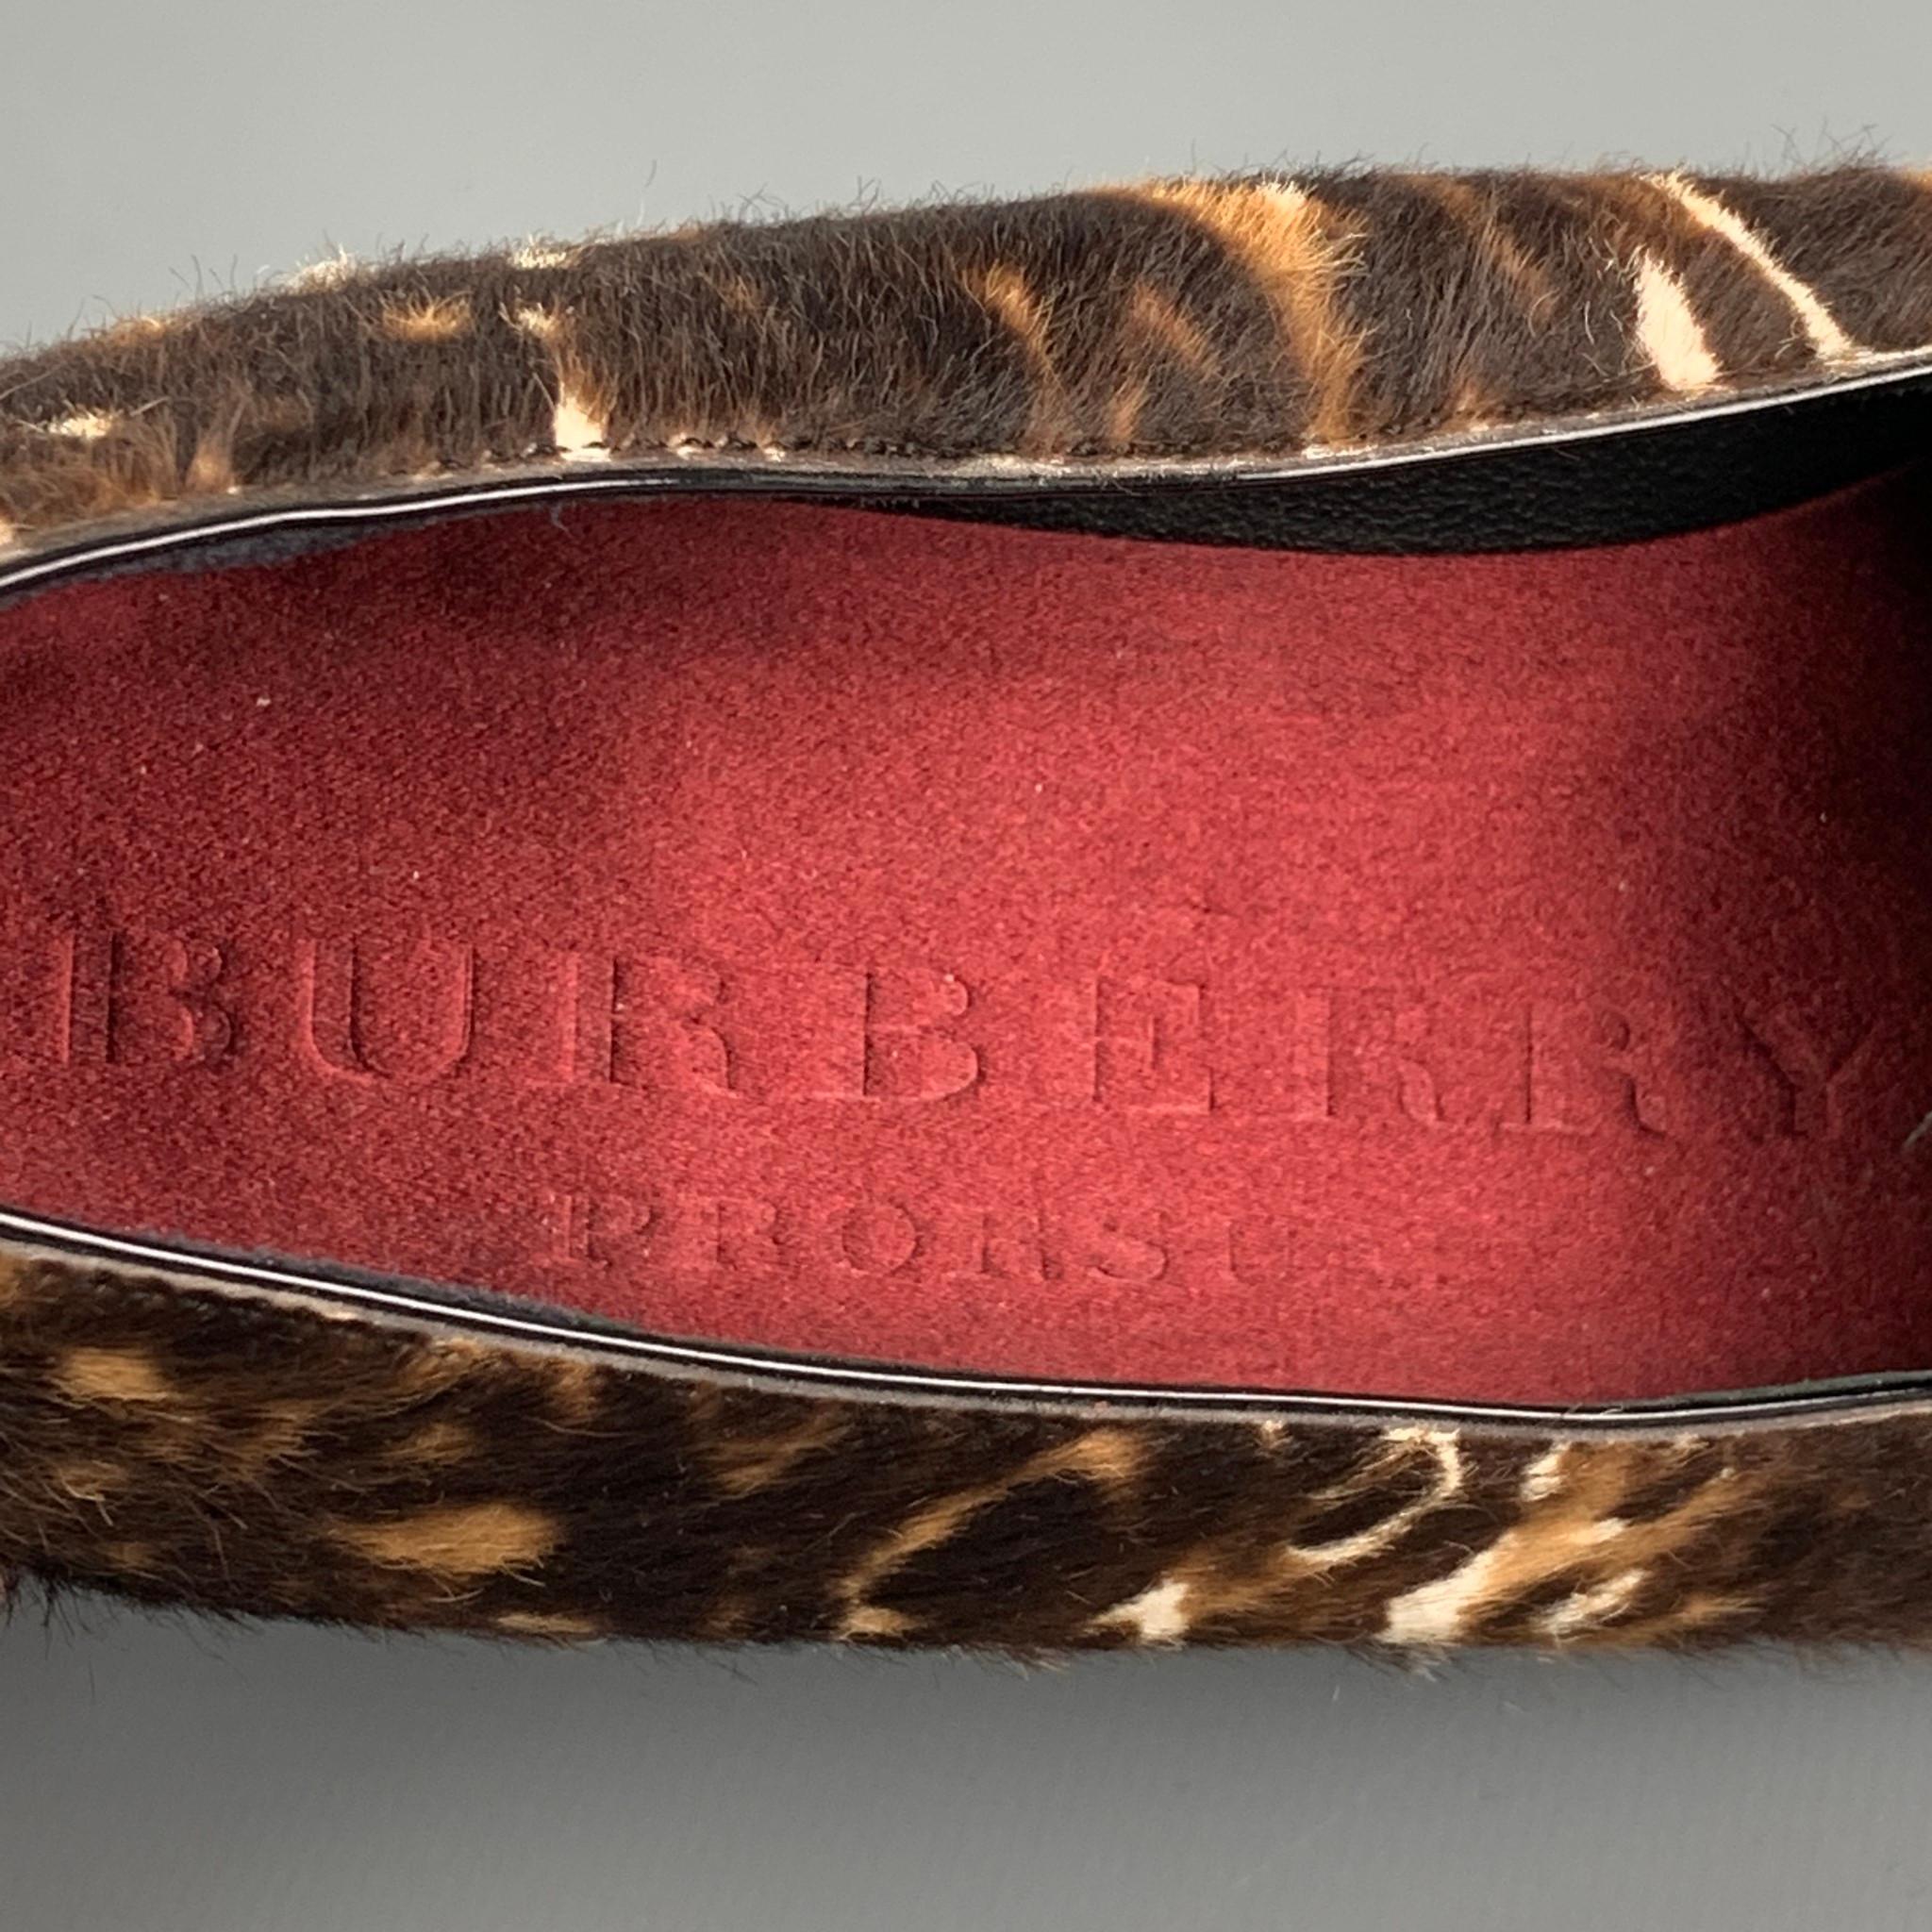 BURBERRY PRORSUM Size 5 Brown Leather Animal Print Pony Hair Slip On Flats 2